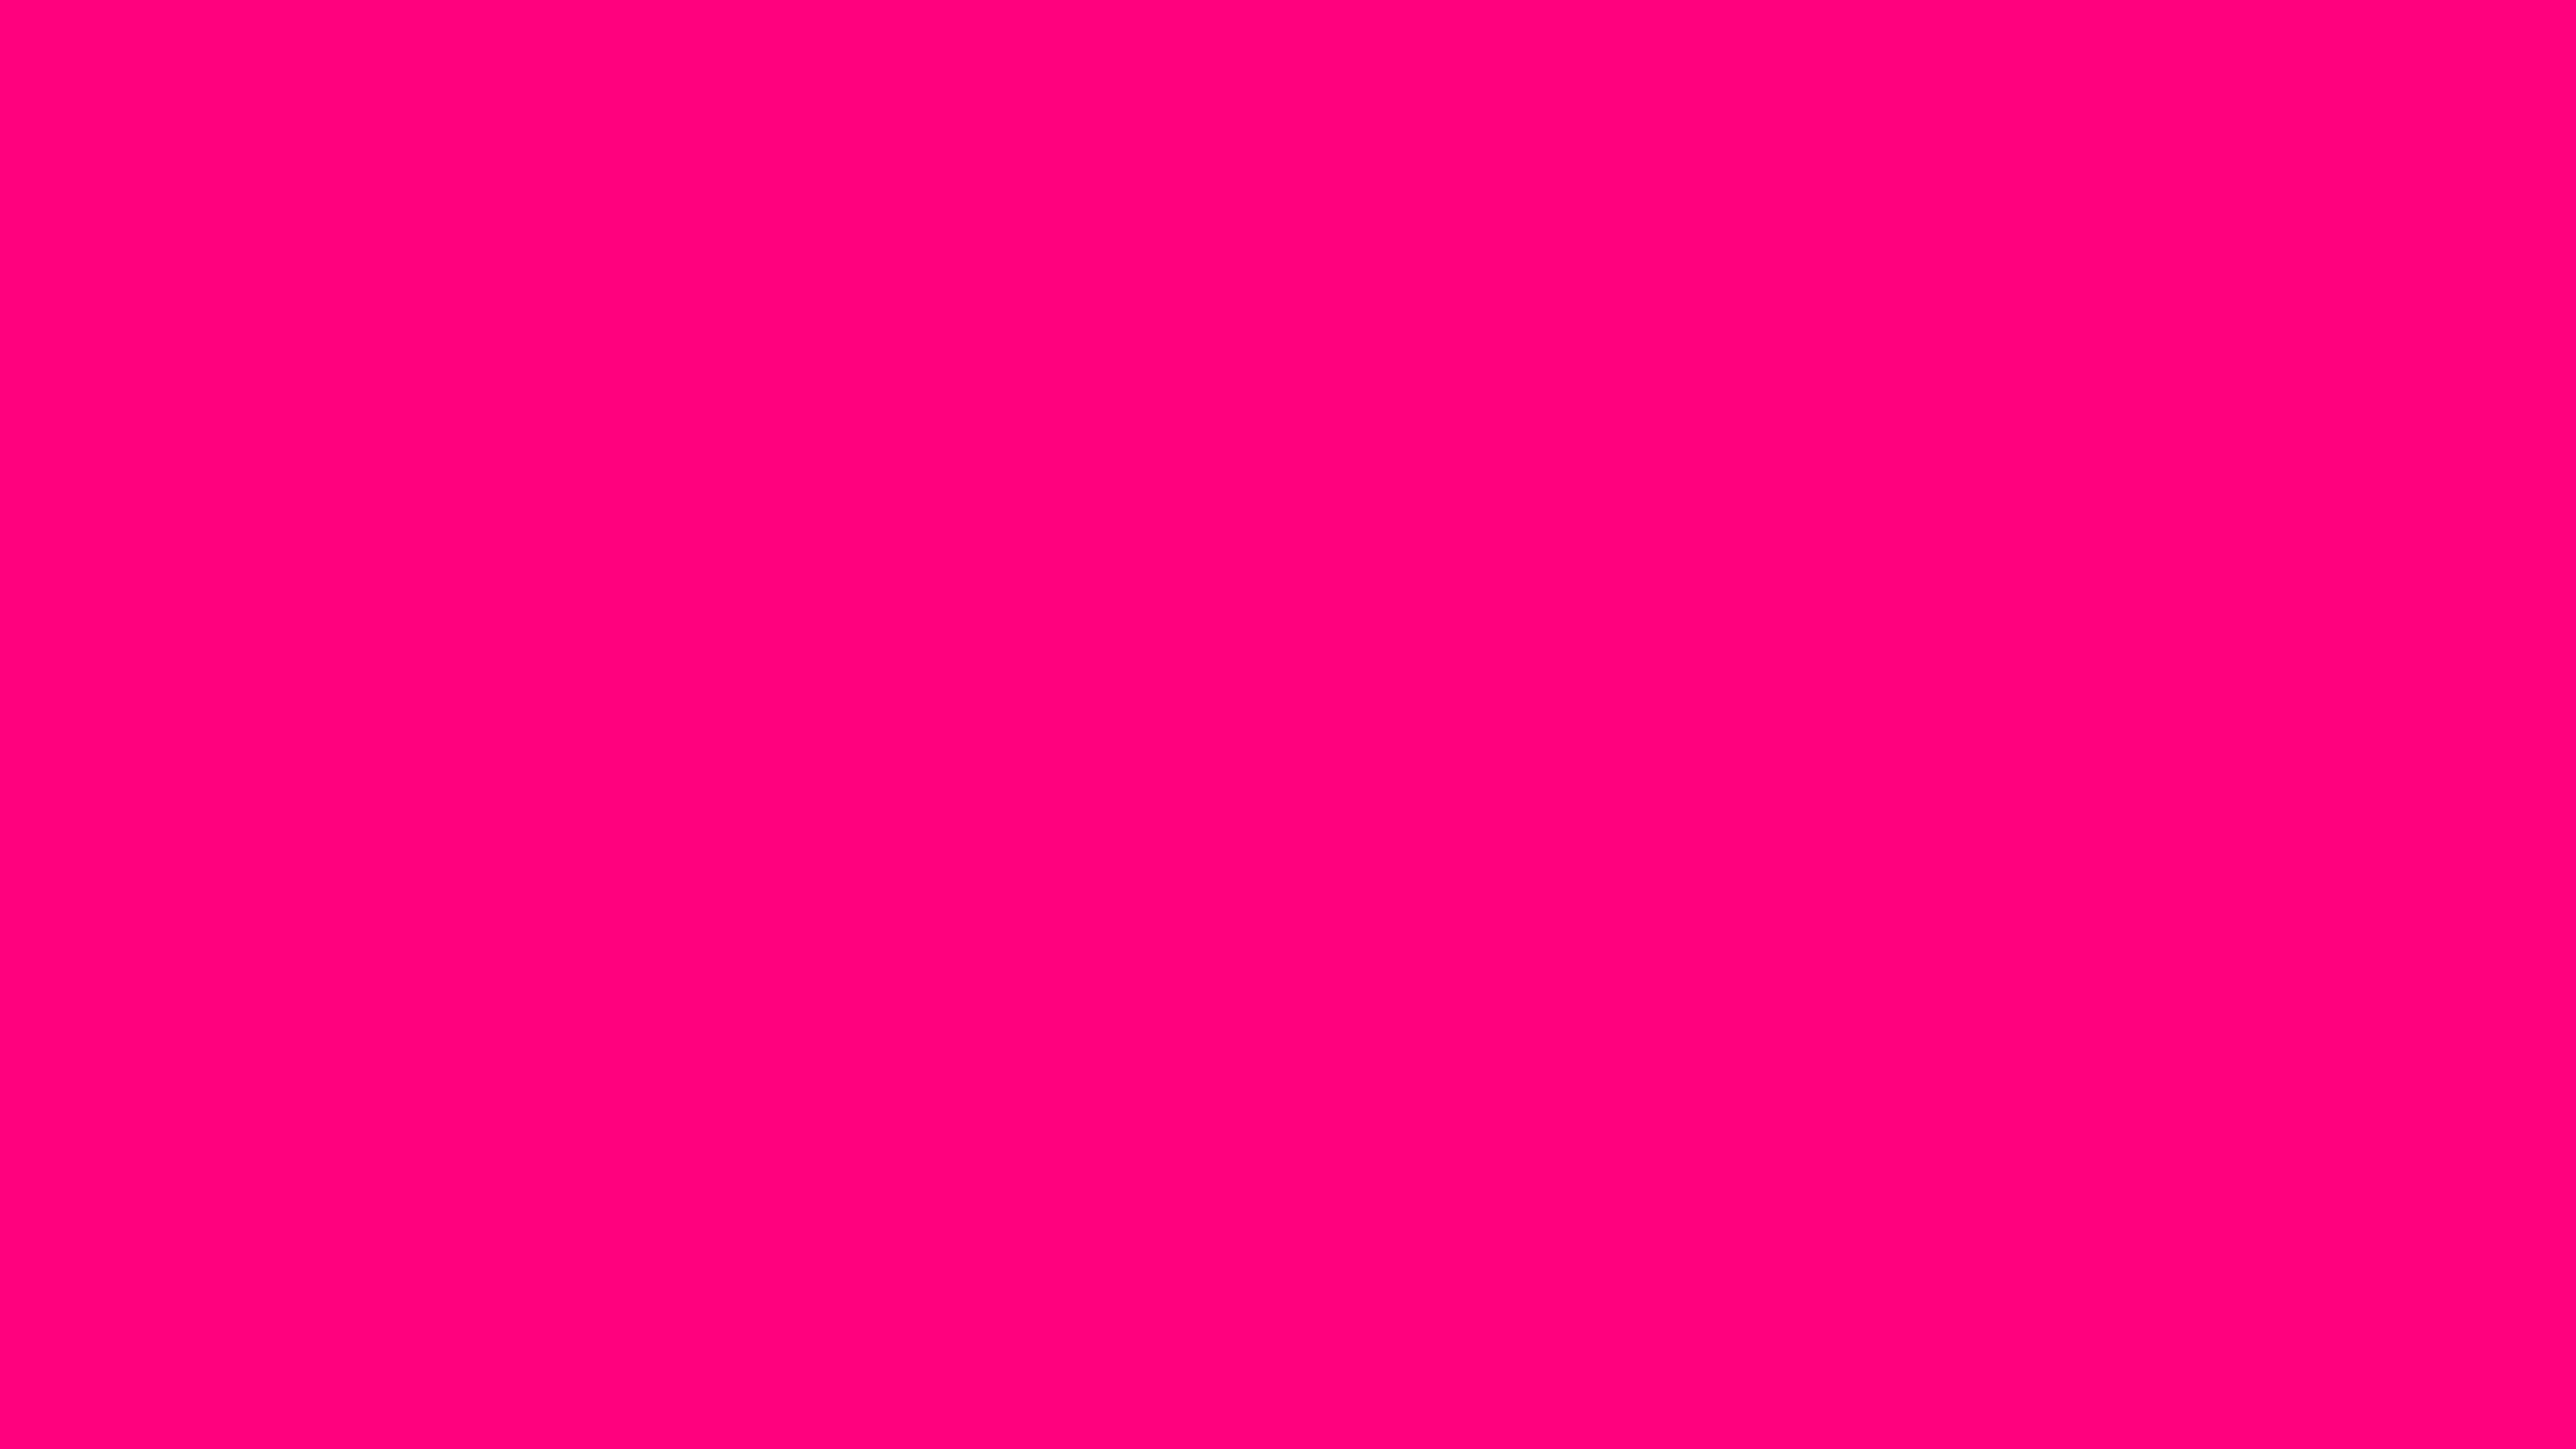 4096x2304 Rose Solid Color Background